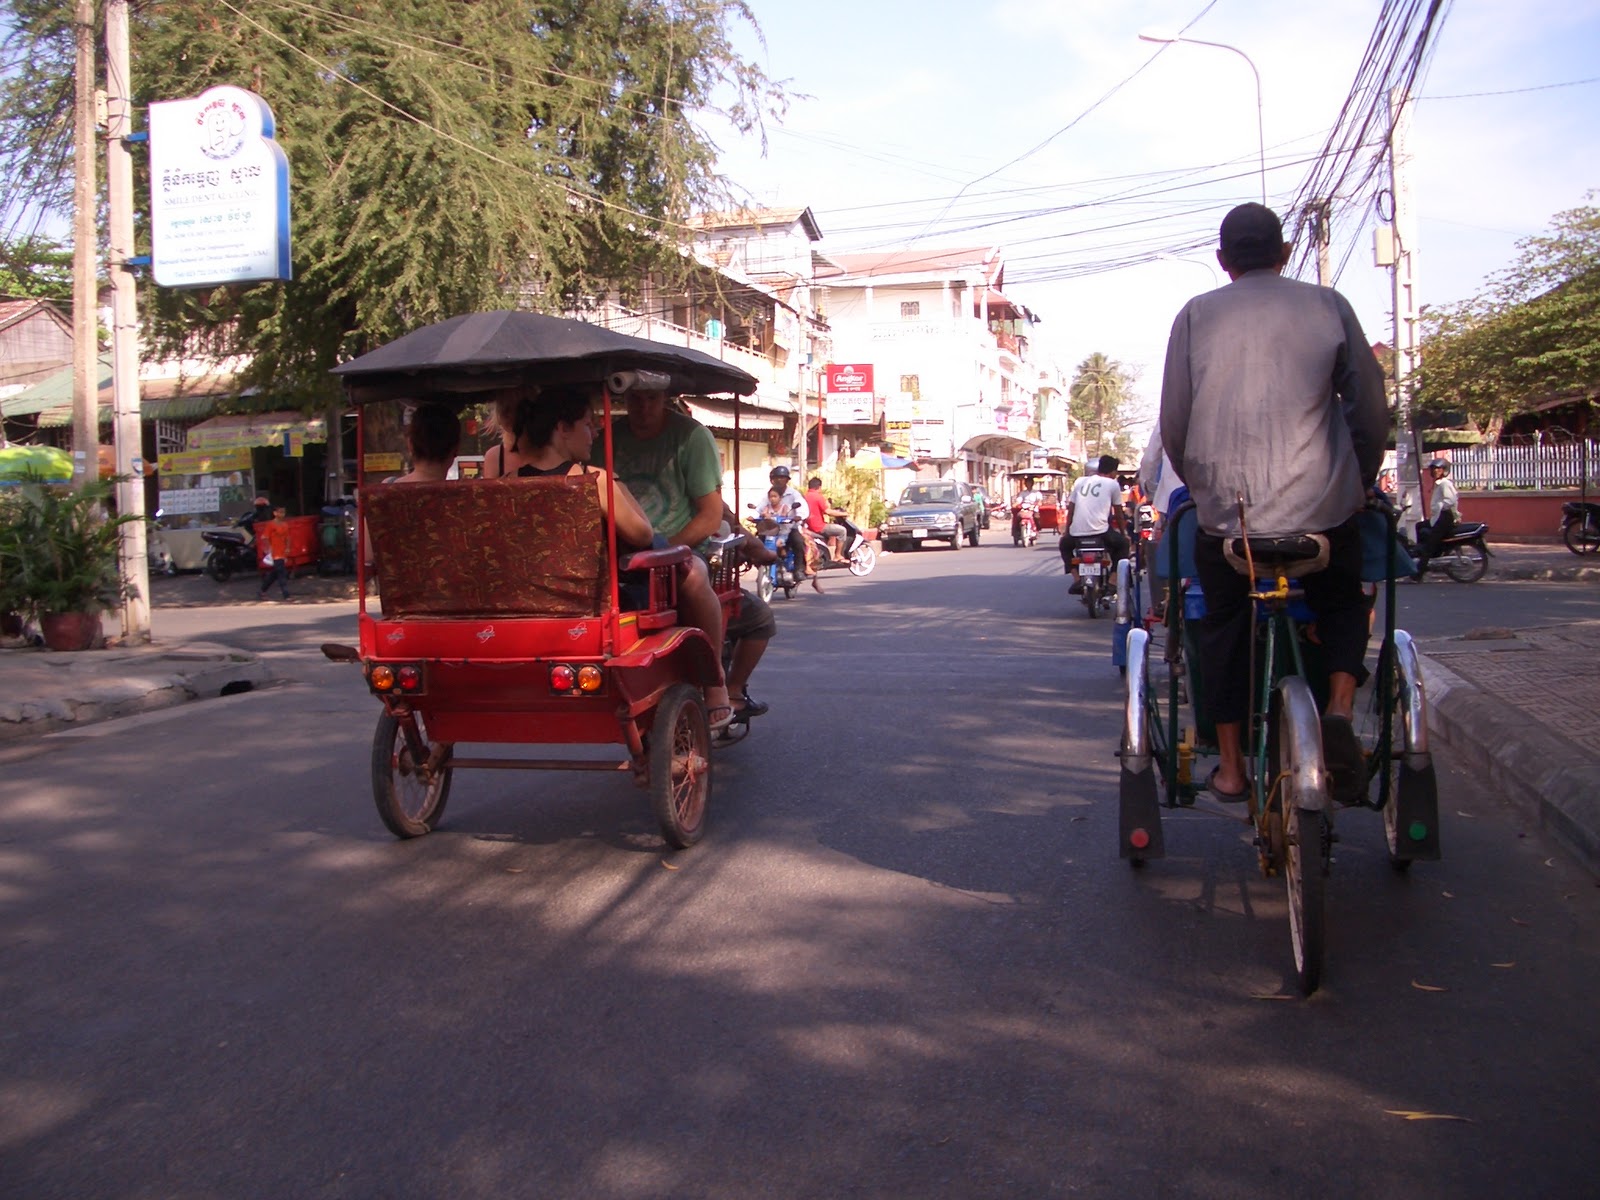 Angela and Chris Cambodia: Crazy Cyclo in Phnom Penh